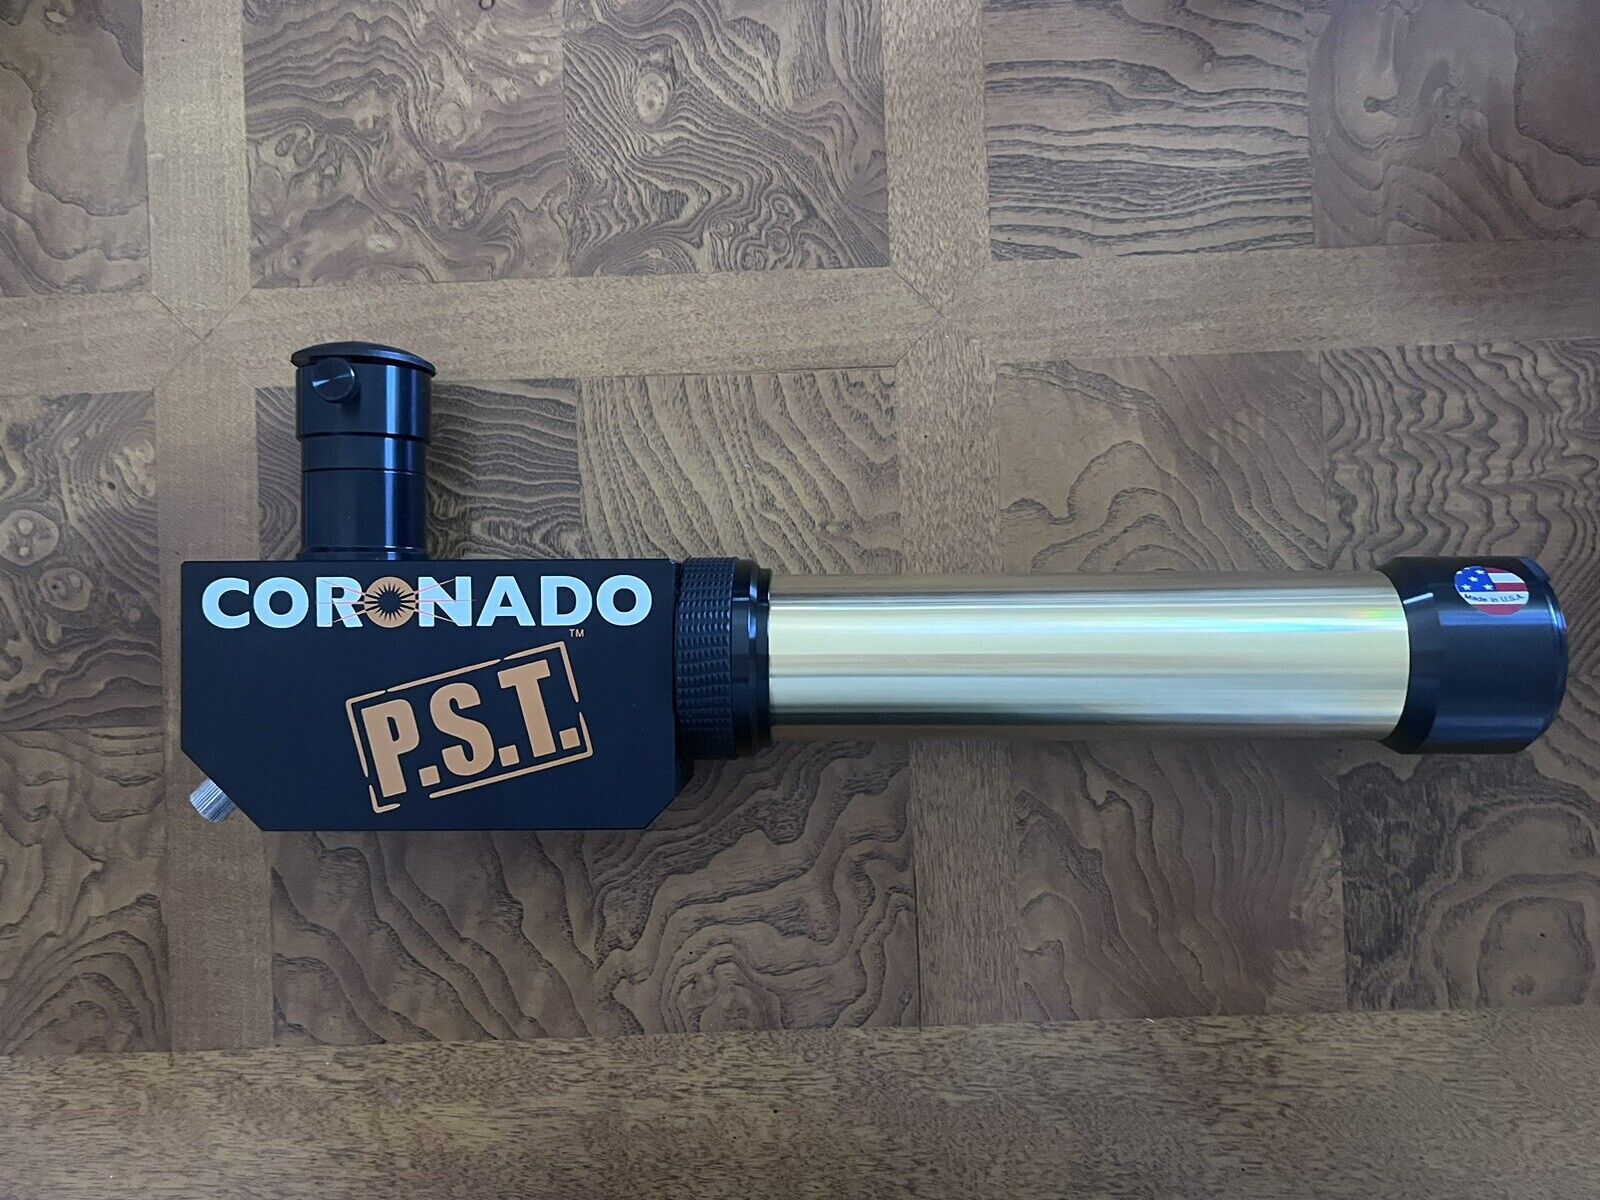 Coronado PST Personal Solar Telescope with Amazon Basics Tripod